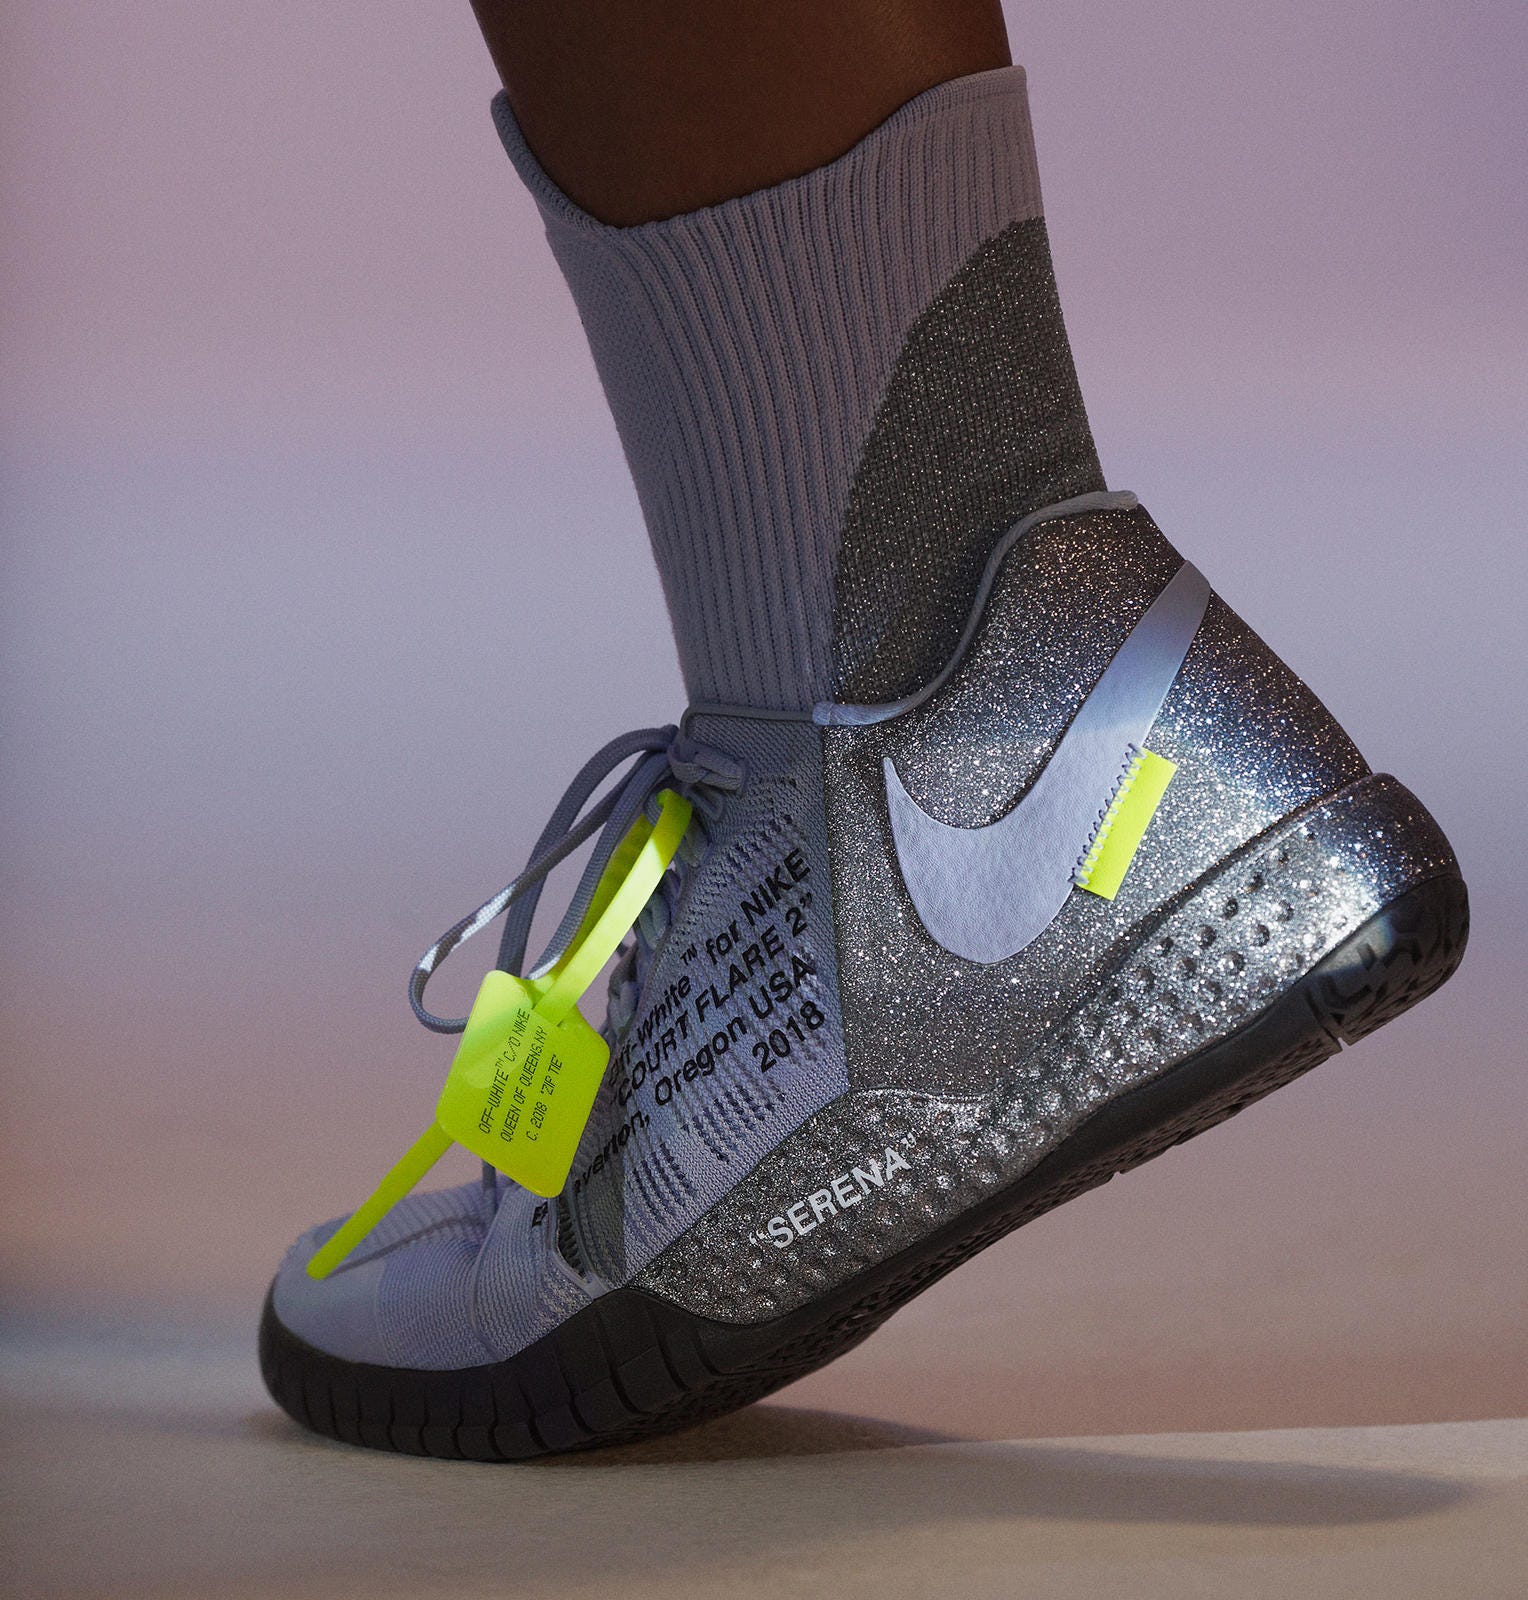 Nike unveils Serena Williams' U.S. Open 